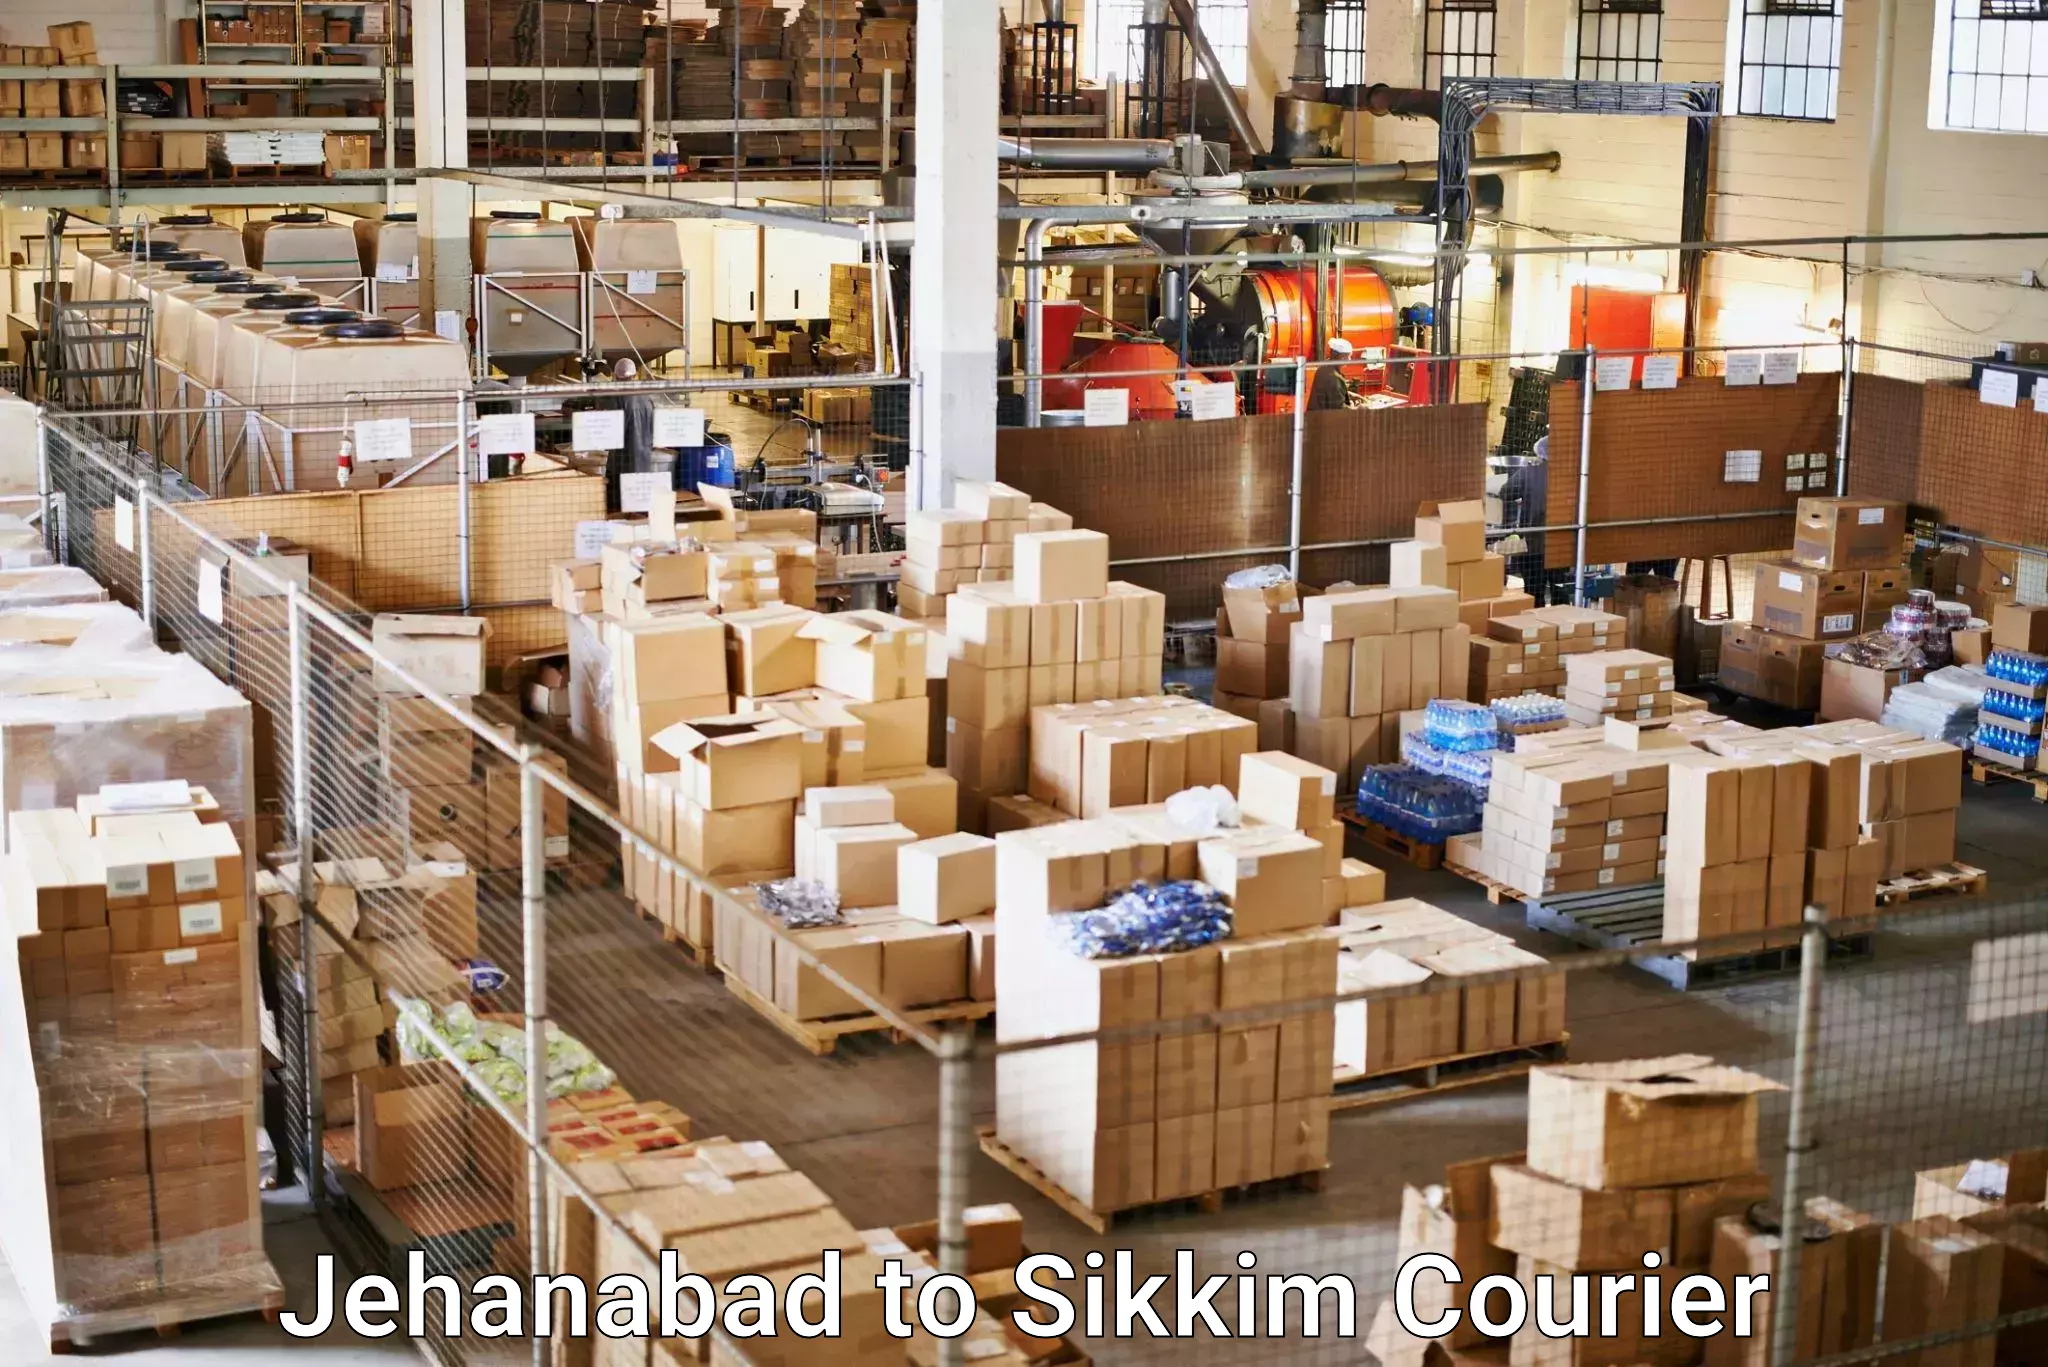 International parcel service Jehanabad to Pelling